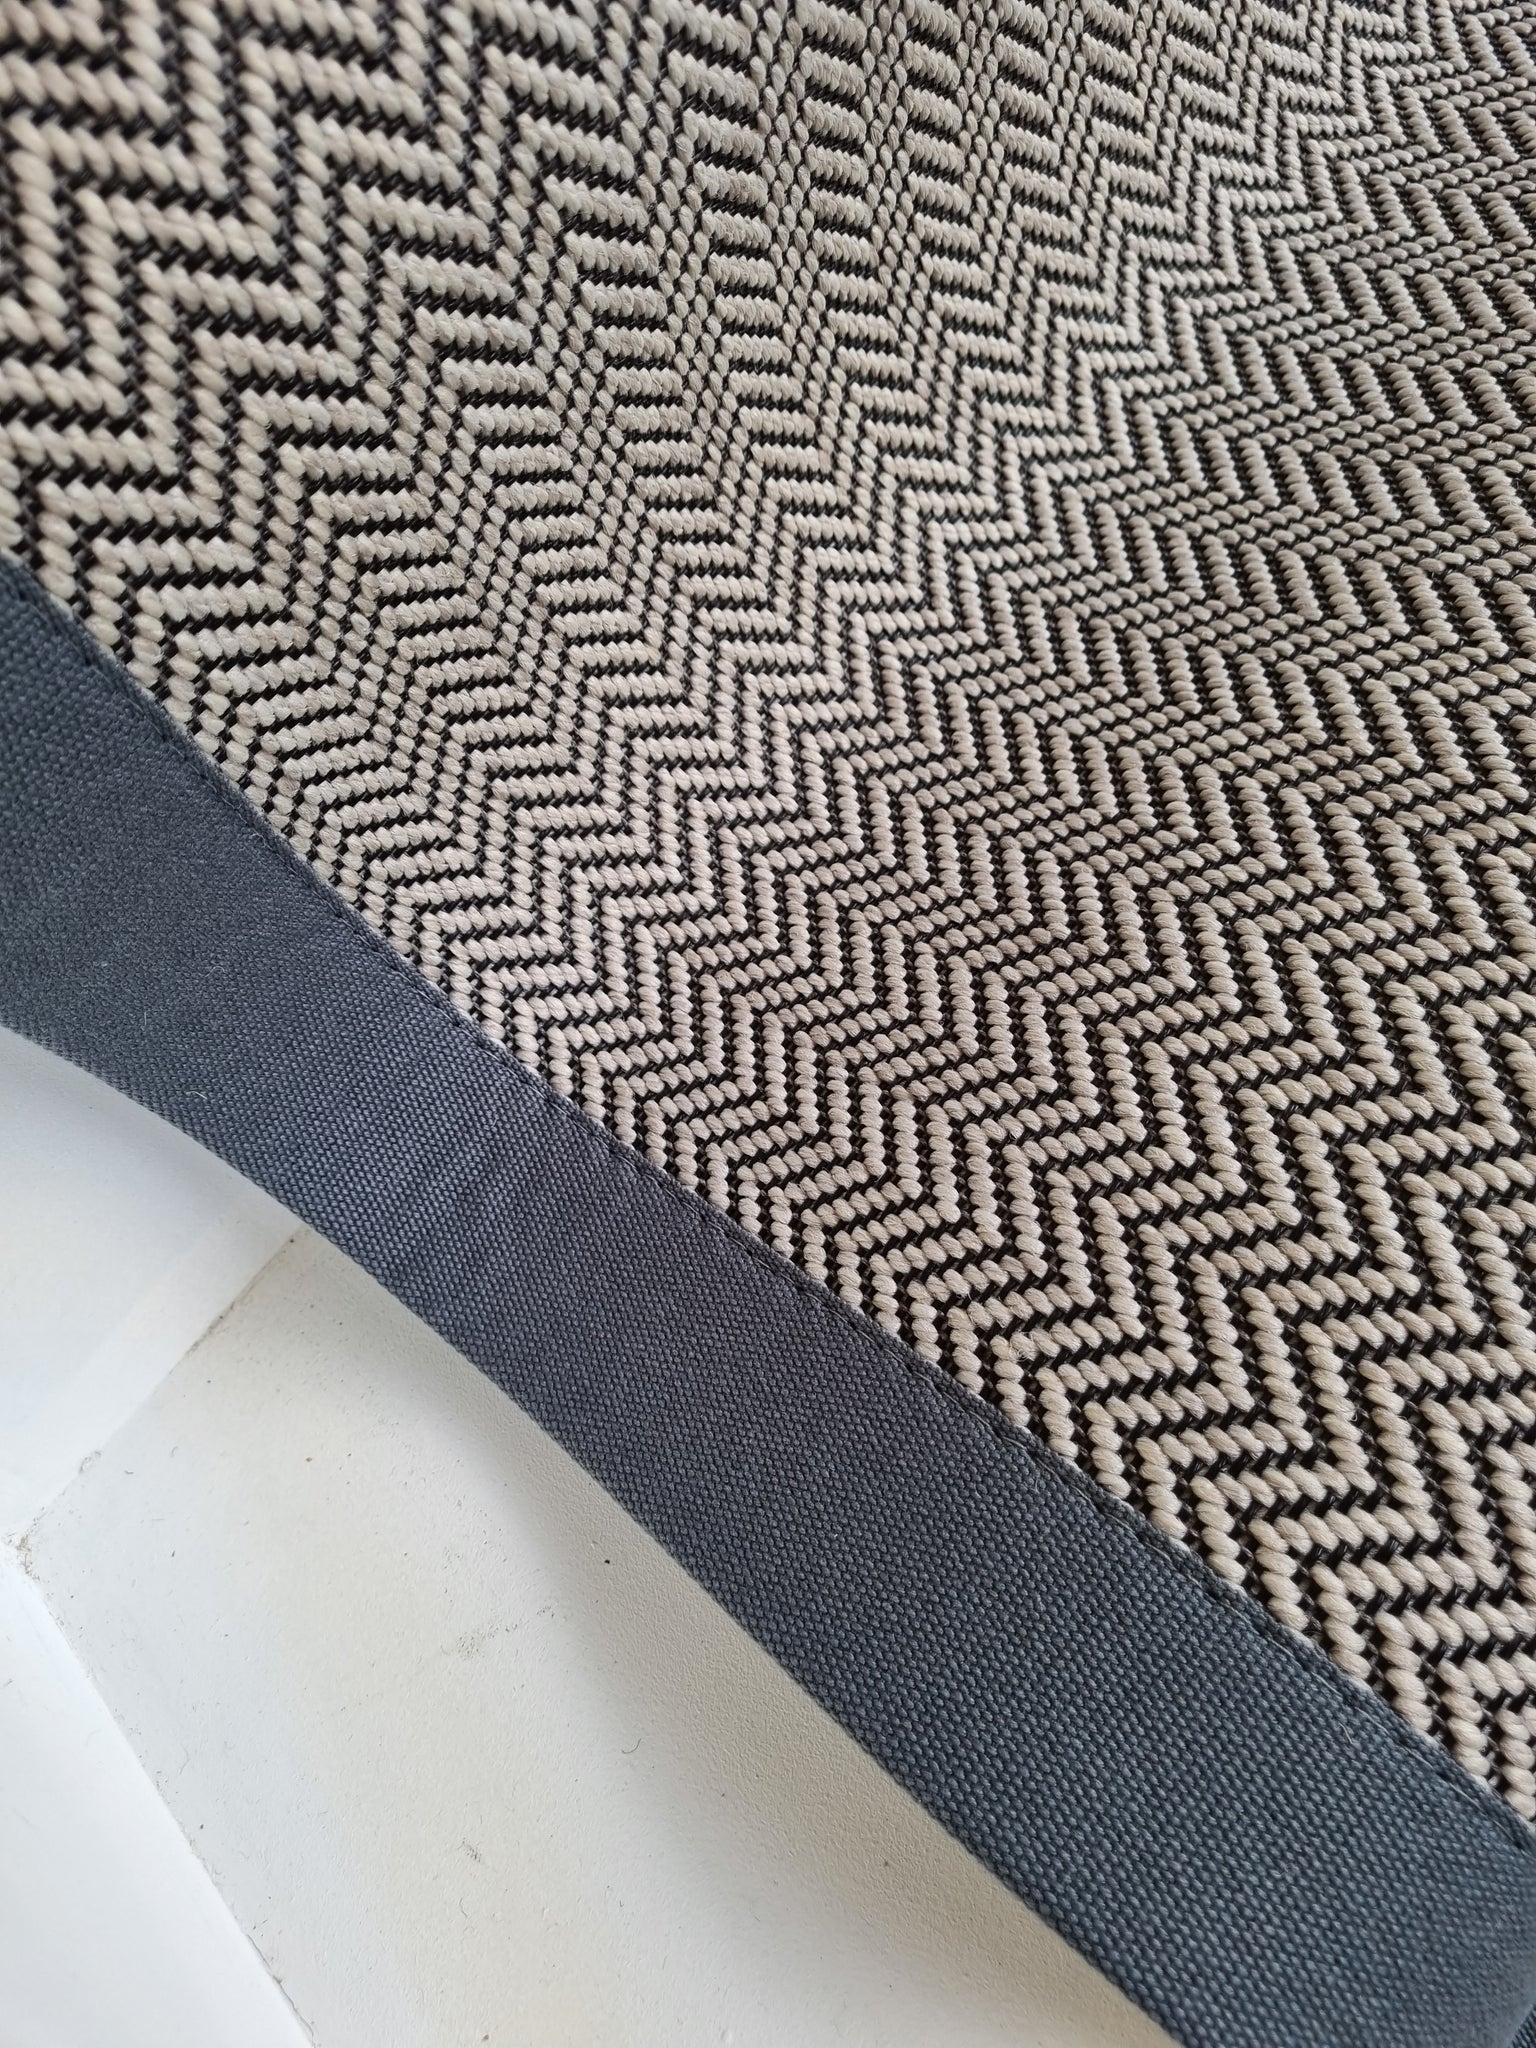 Black & White Herringbone Faux Sisal Carpet Stair Runner with Gun Metal Grey Cotton border